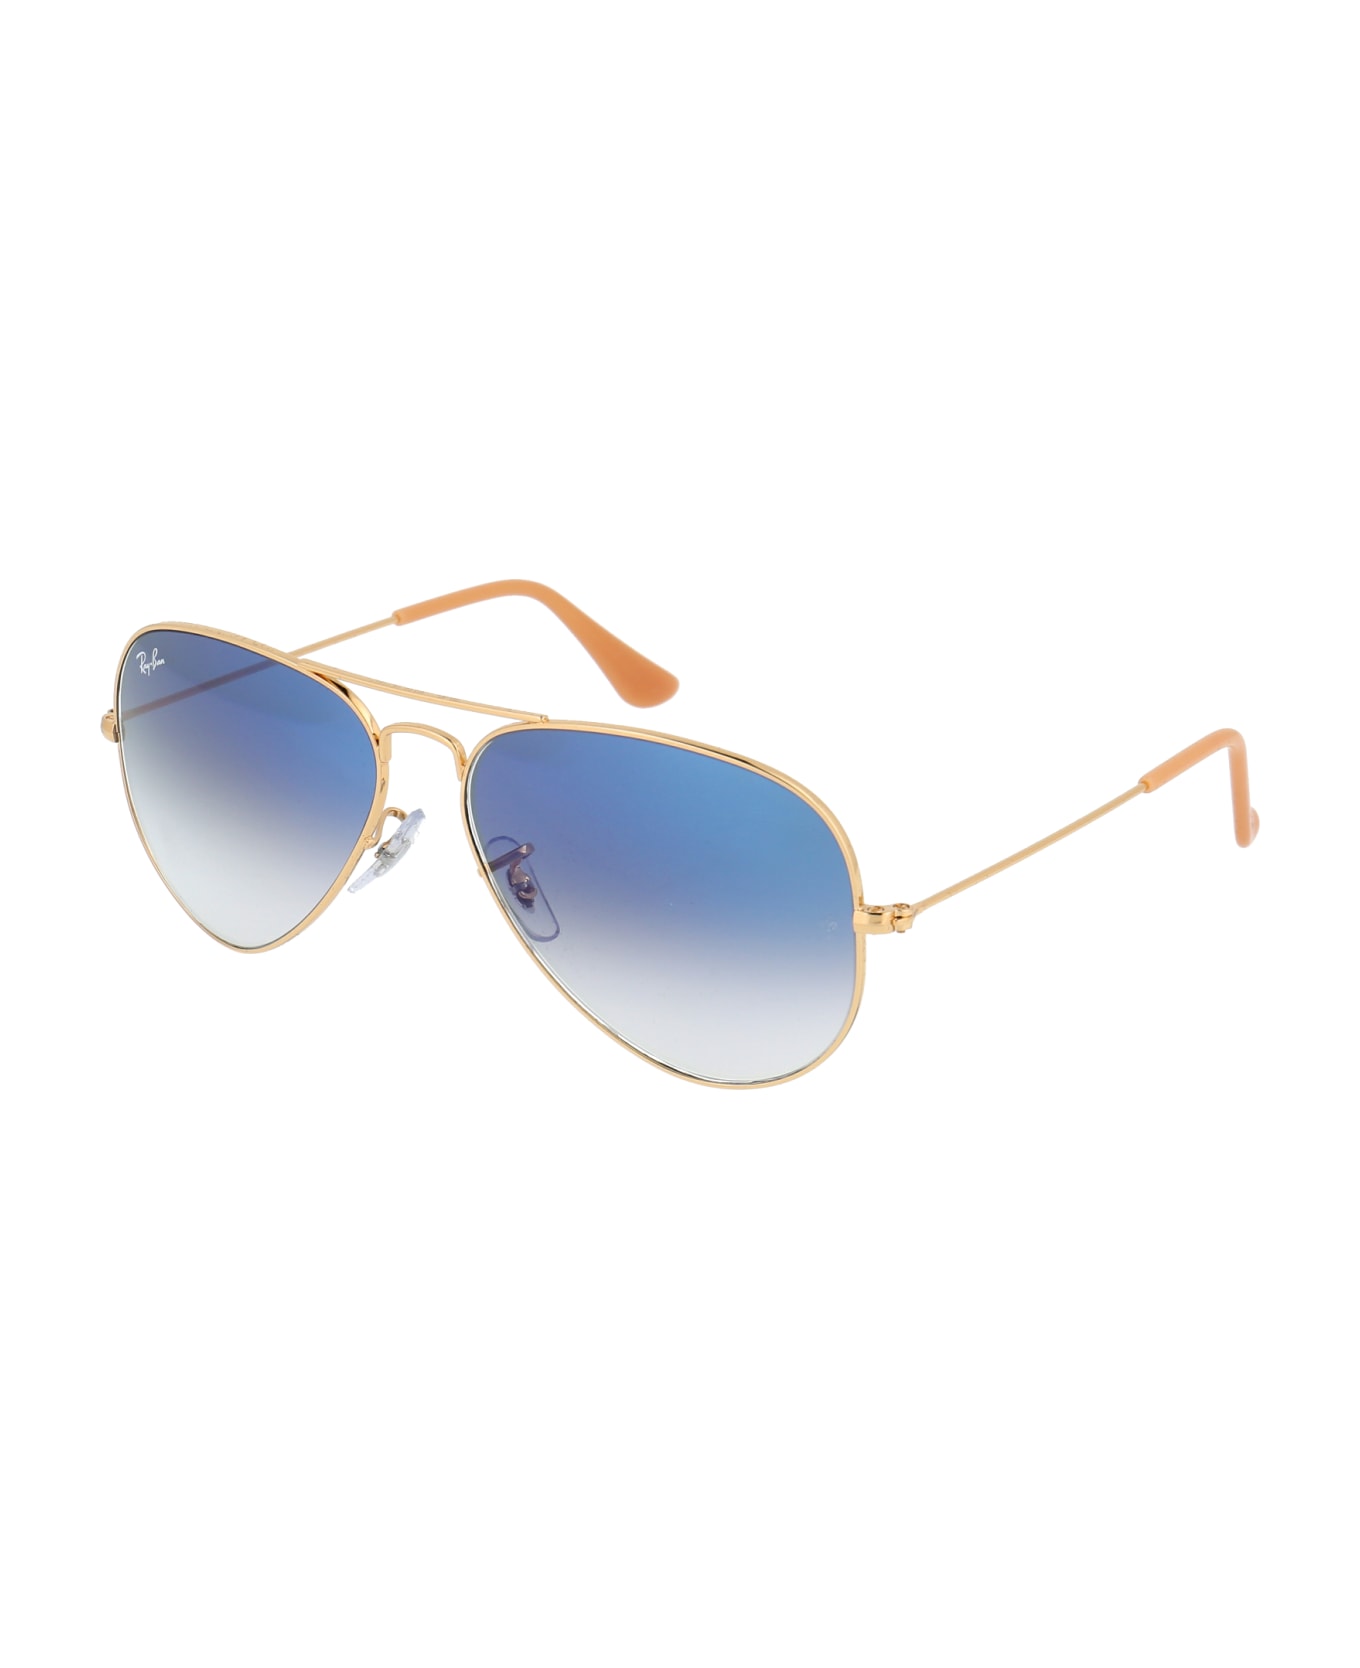 Ray-Ban Aviator Sunglasses - 001/3F GOLD